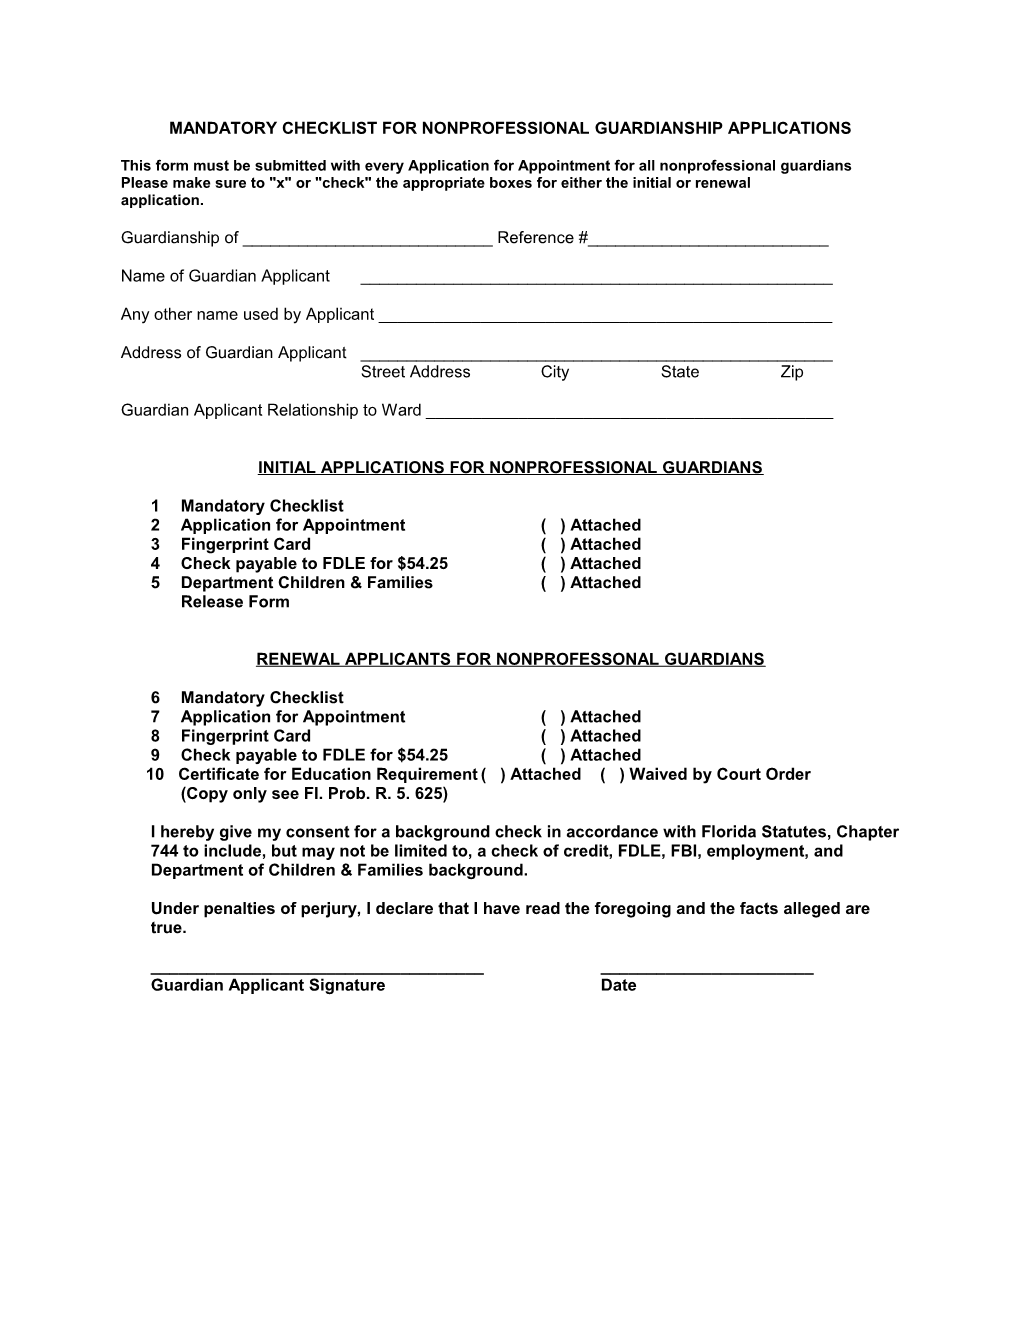 Mandatory Checklist for Nonprofessional Guardianship Applications